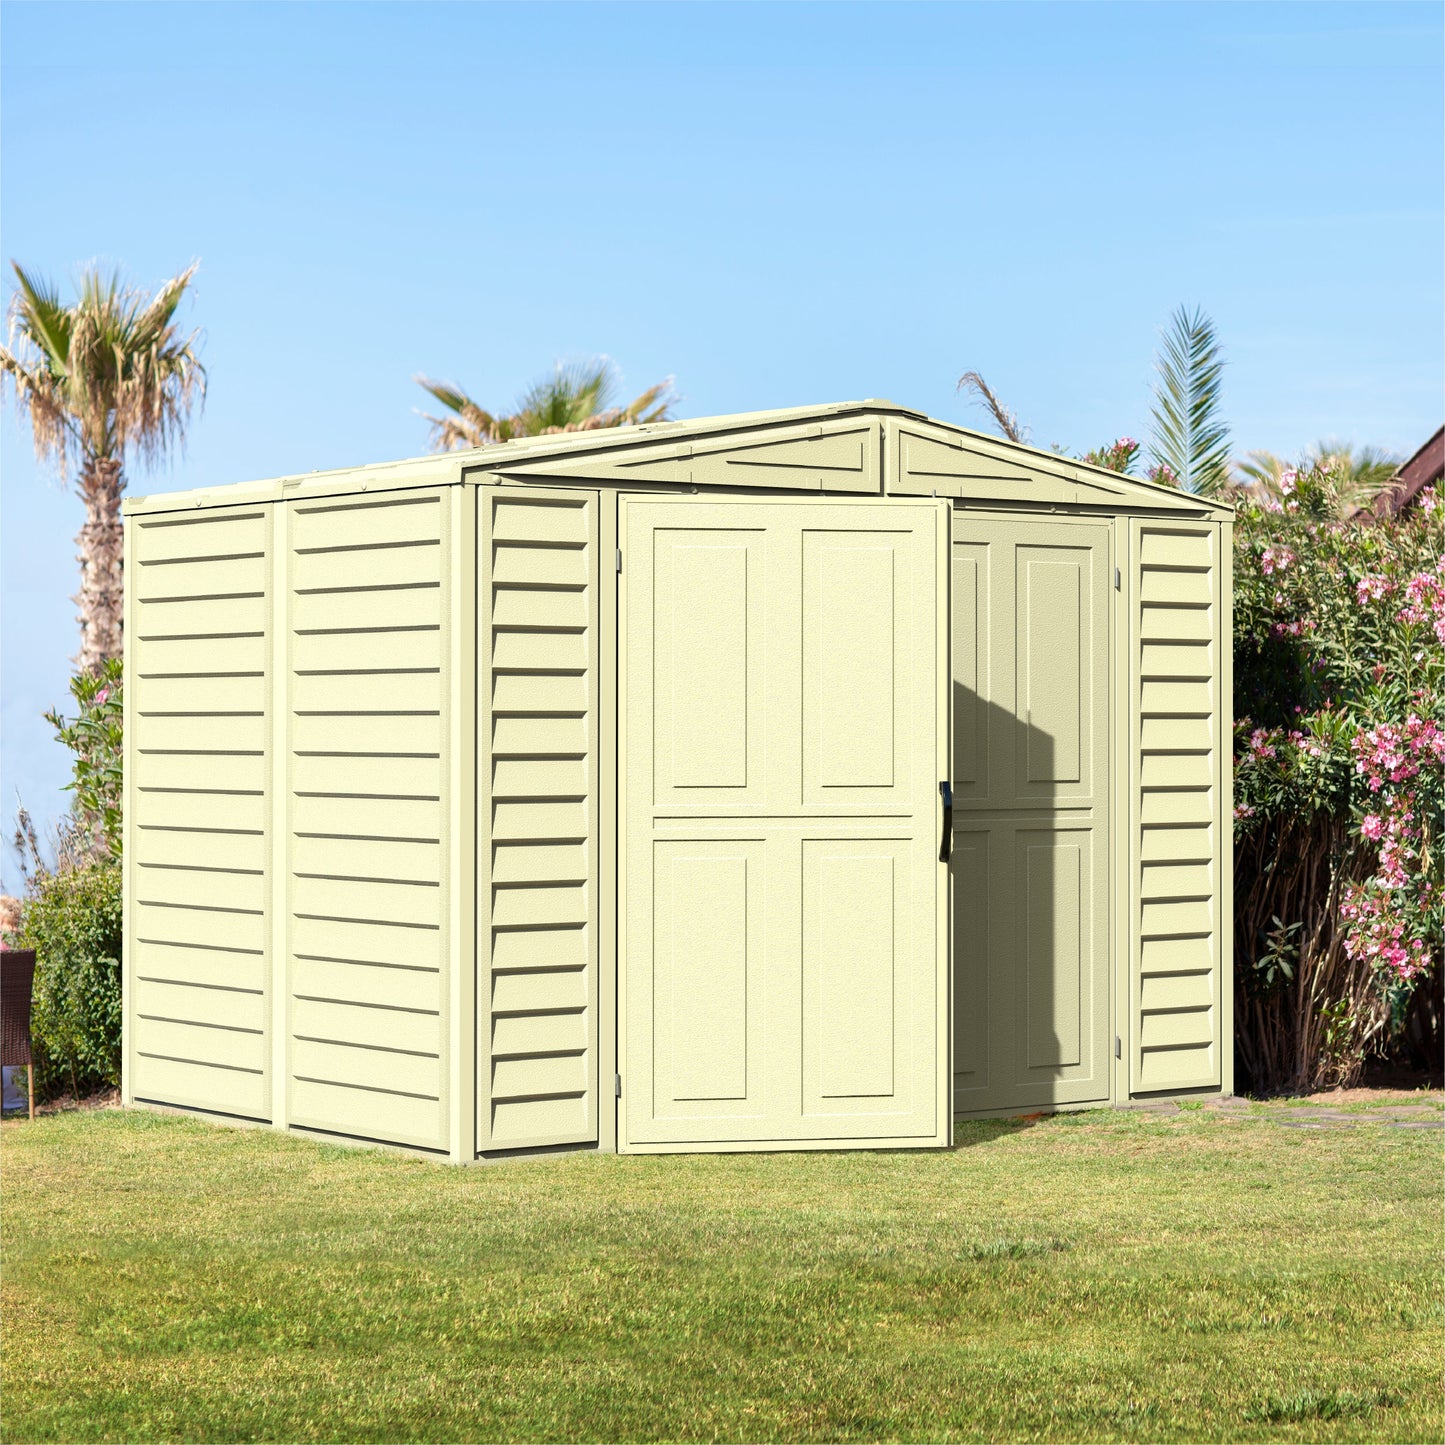 Walk-in Garden & Outdoor Storage Shed 8x5.5ft- Cosmoplast KSA